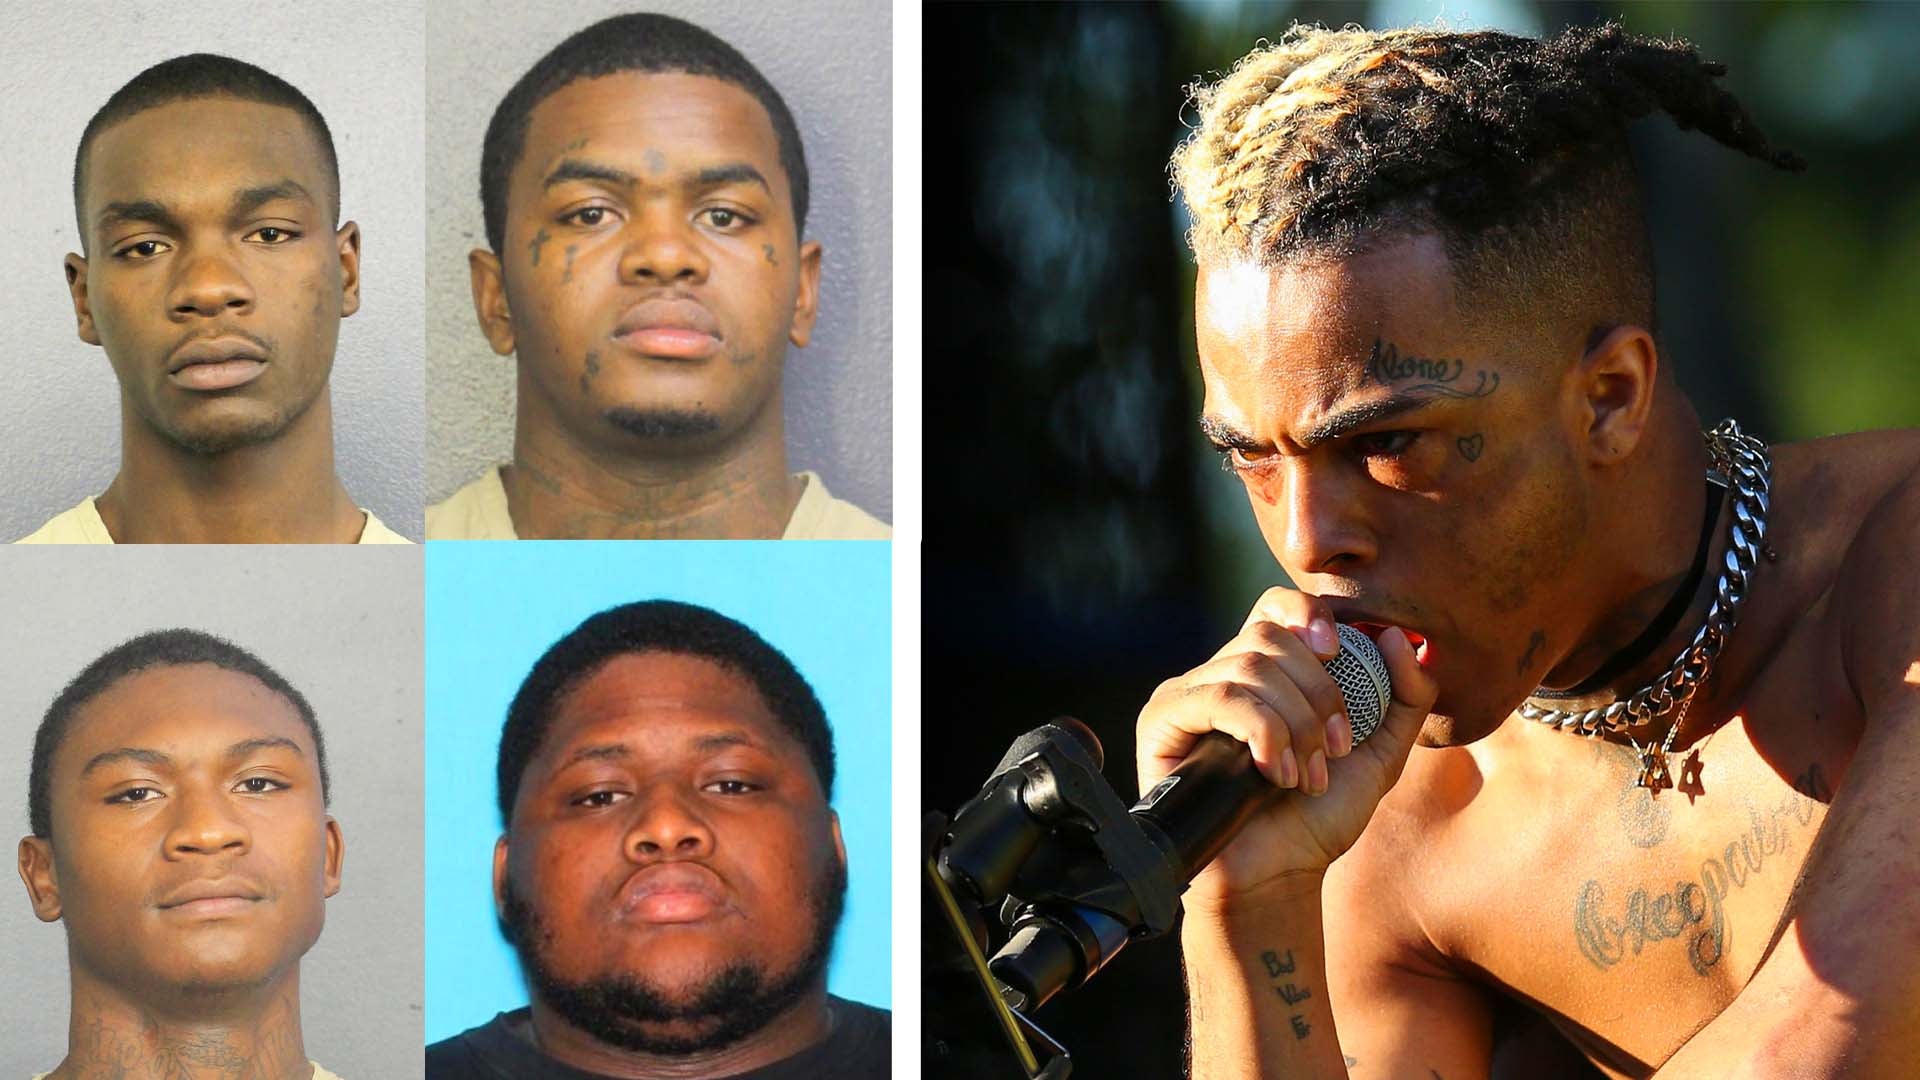 Wwwxxx Tentacion News Videoww - Trial Begins for 3 Suspects Accused of Killing Rapper XXXTentacion in 2018  | Inside Edition